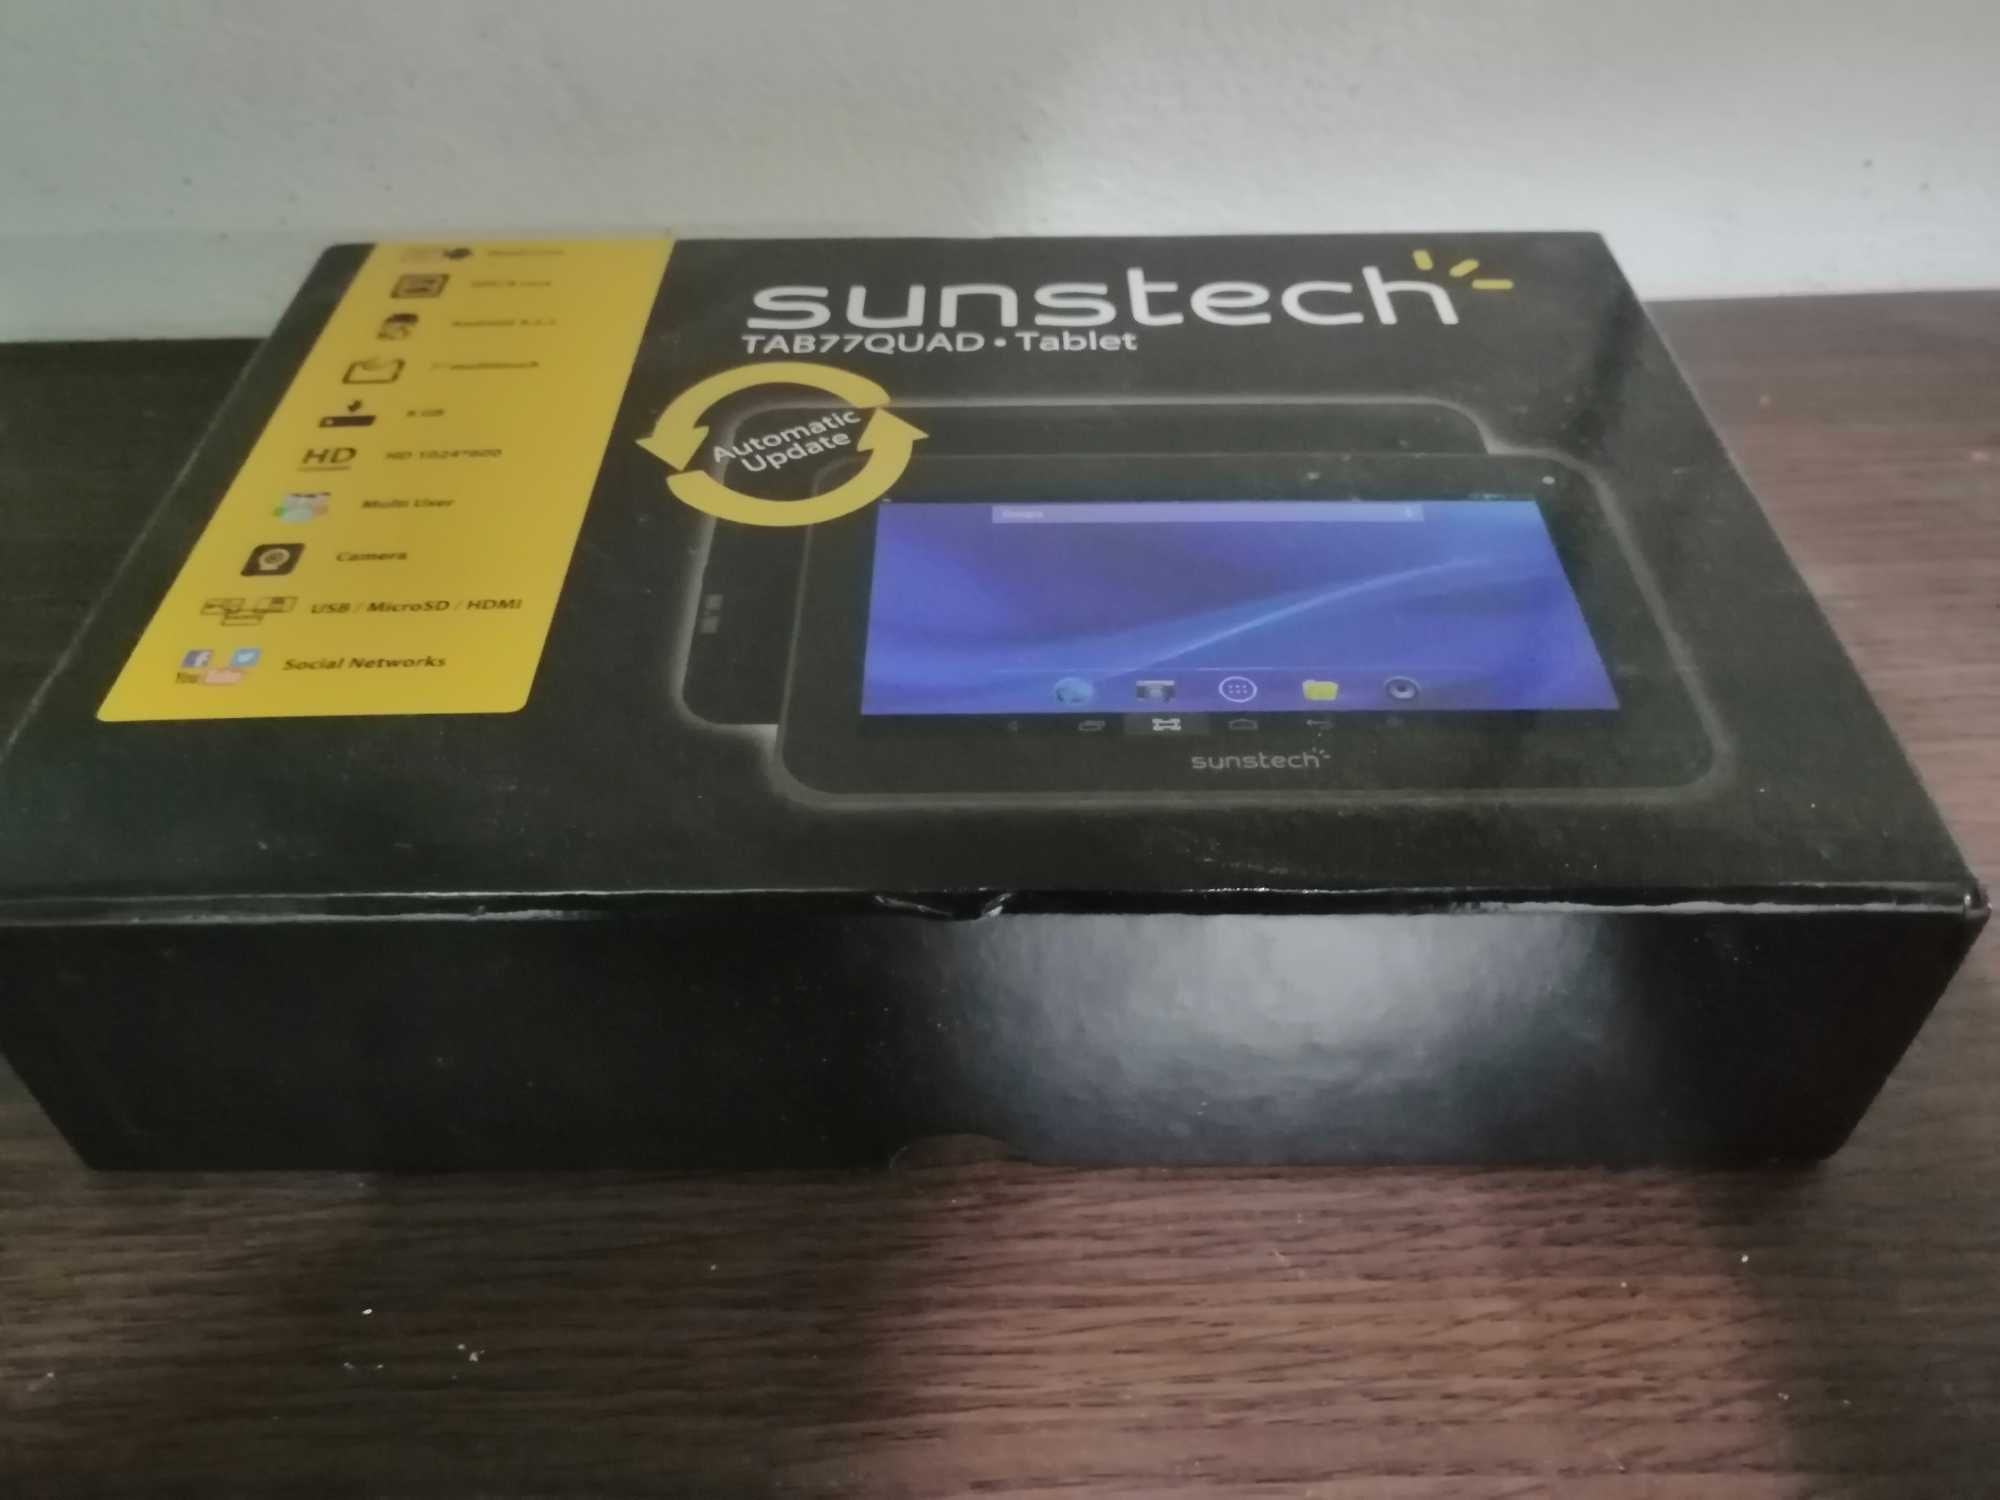 Tablet Sunstech tab77quad.